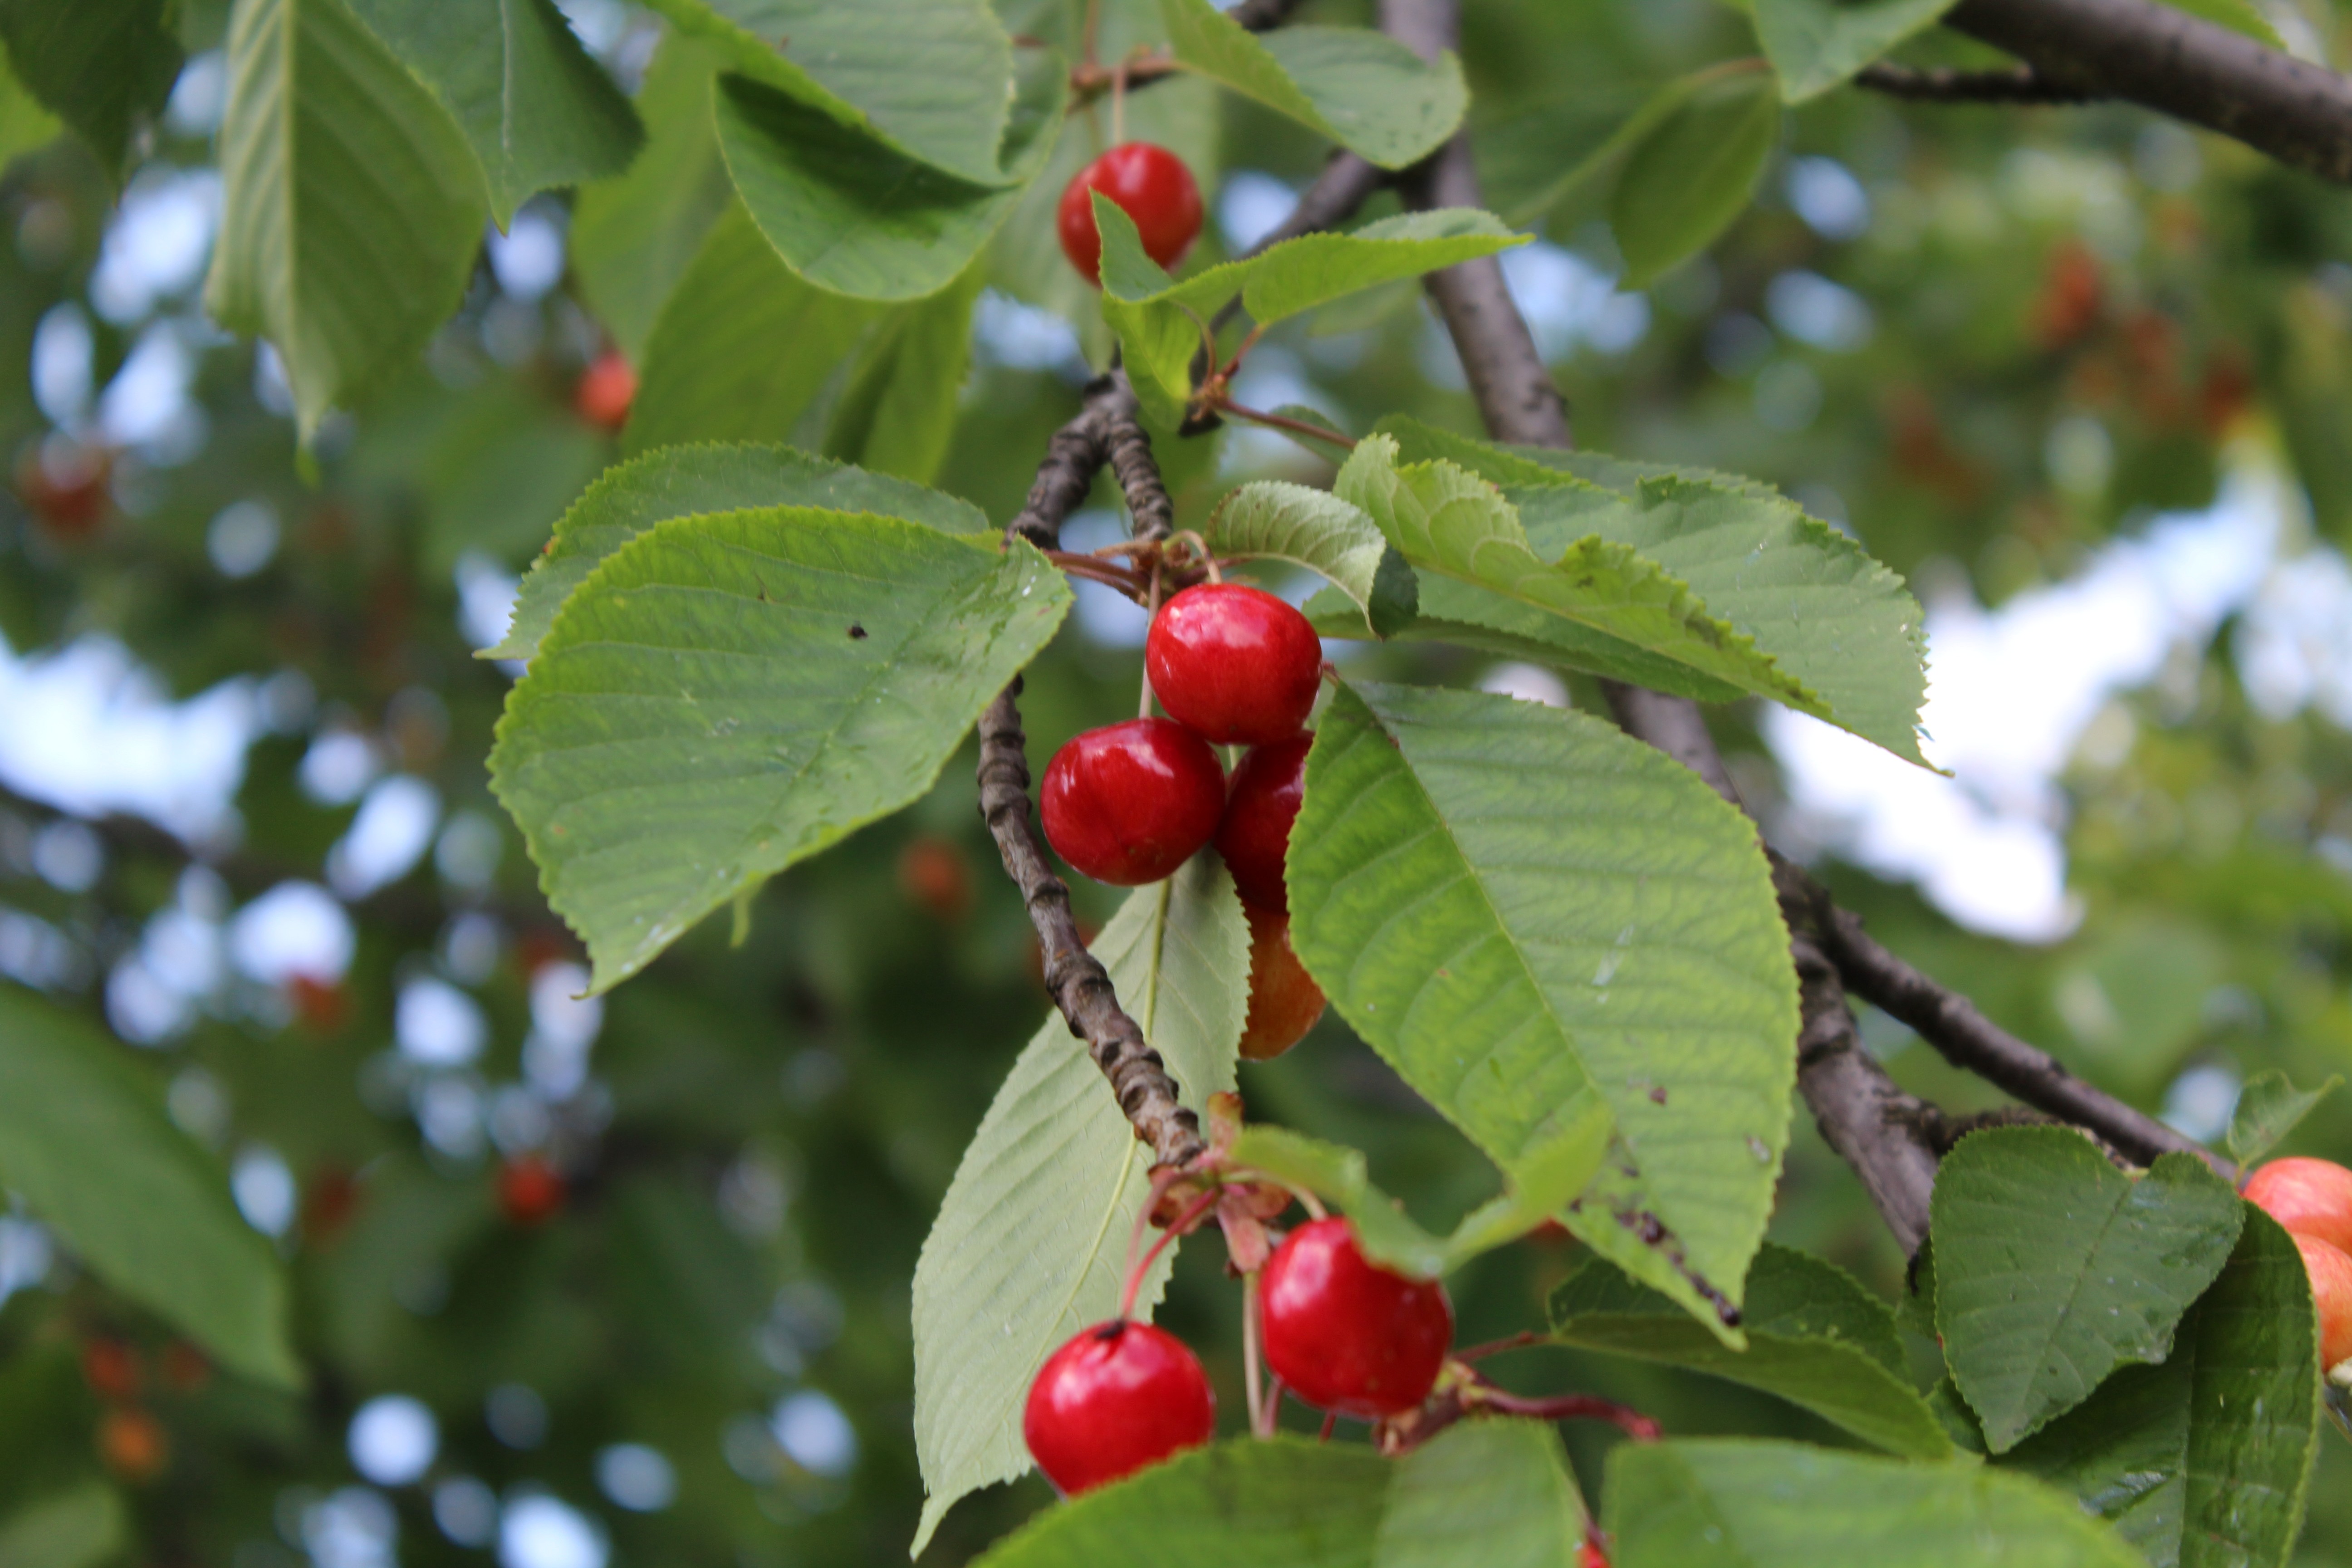 General 5184x3456 cherries plants fruit food leaves twigs nature trees